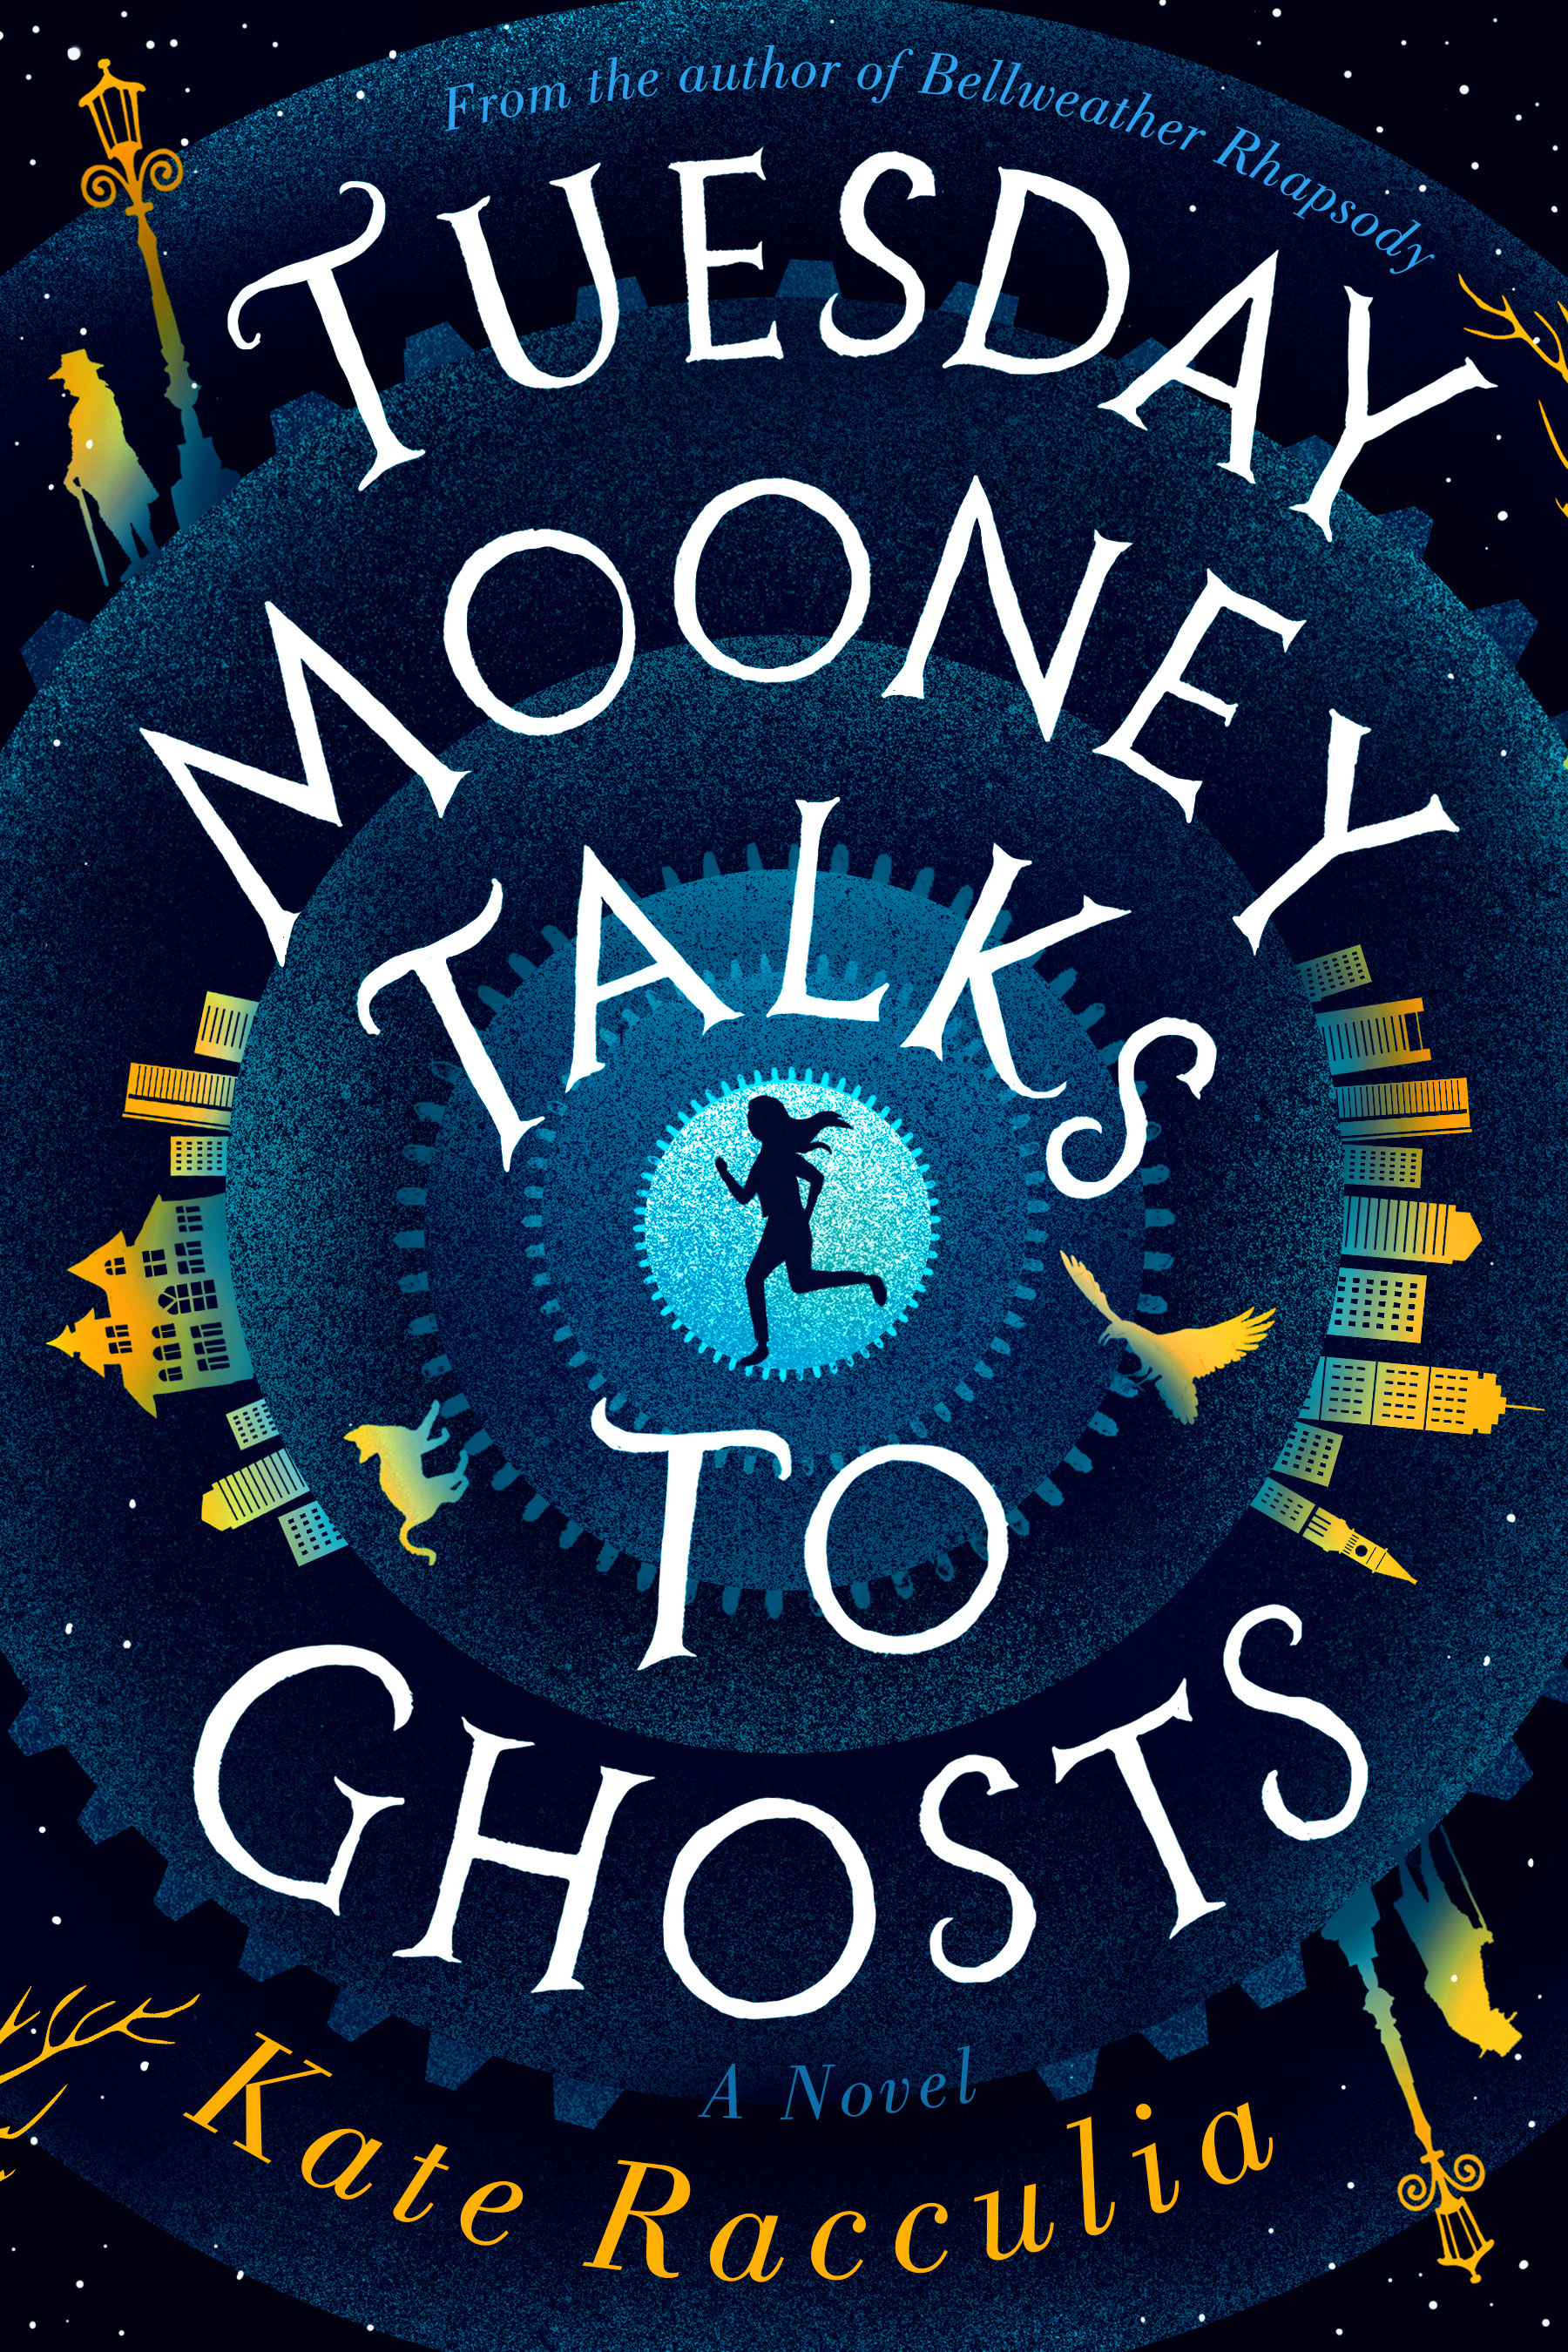 Tuesday Mooney Talks to Ghosts.jpg